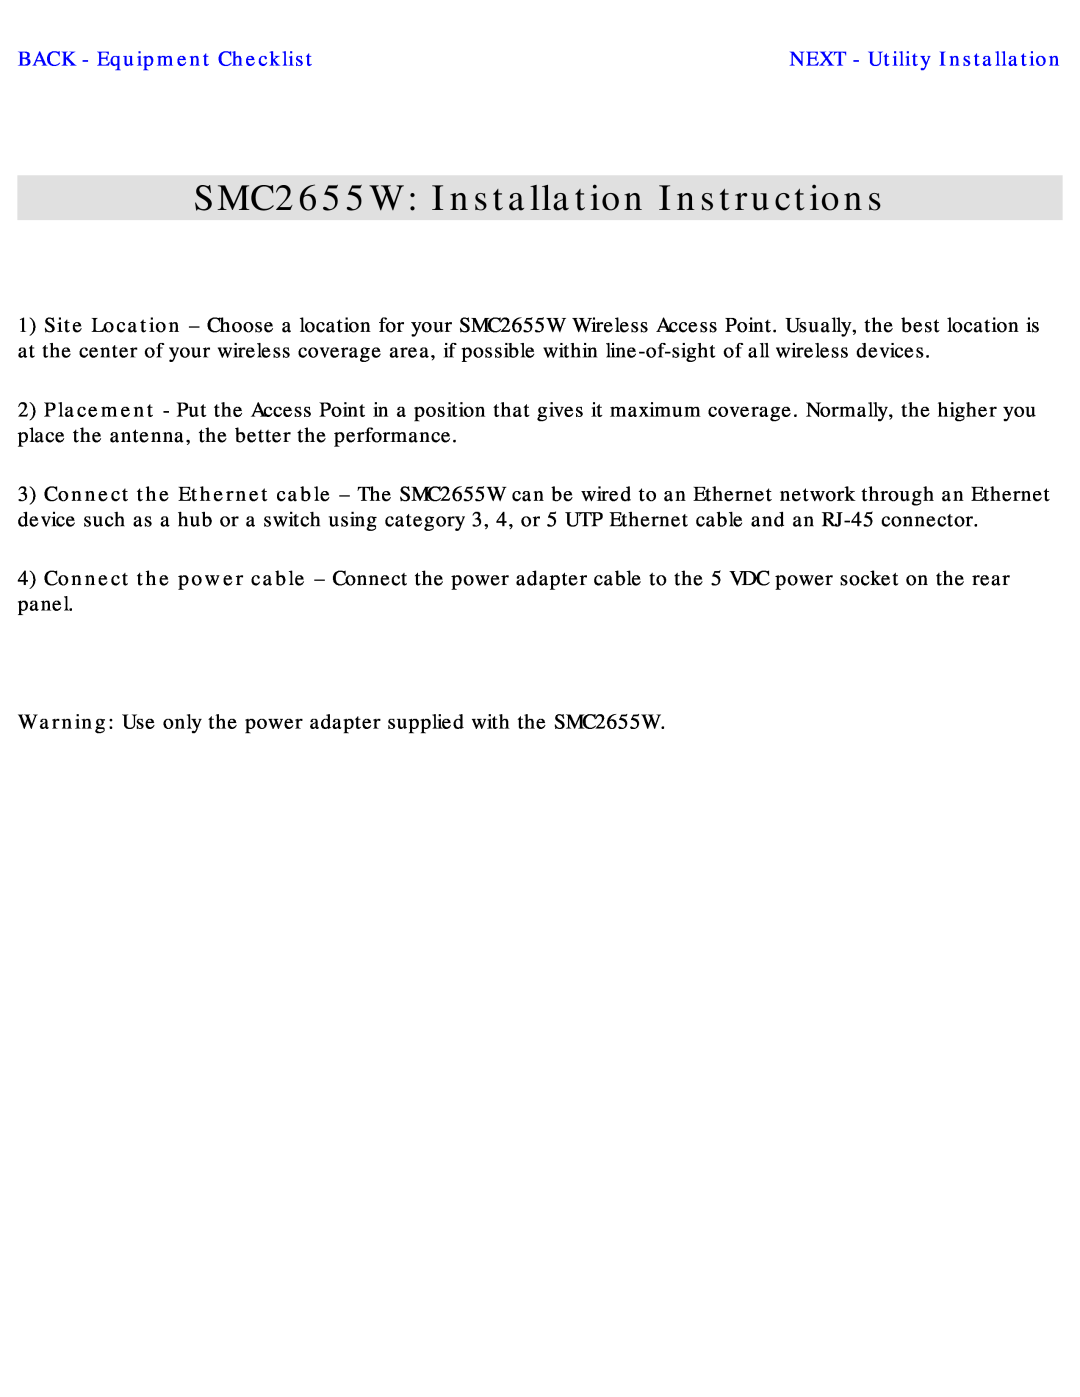 SMC Networks warranty SMC2655W Installation Instructions, BACK - Equipment Checklist 